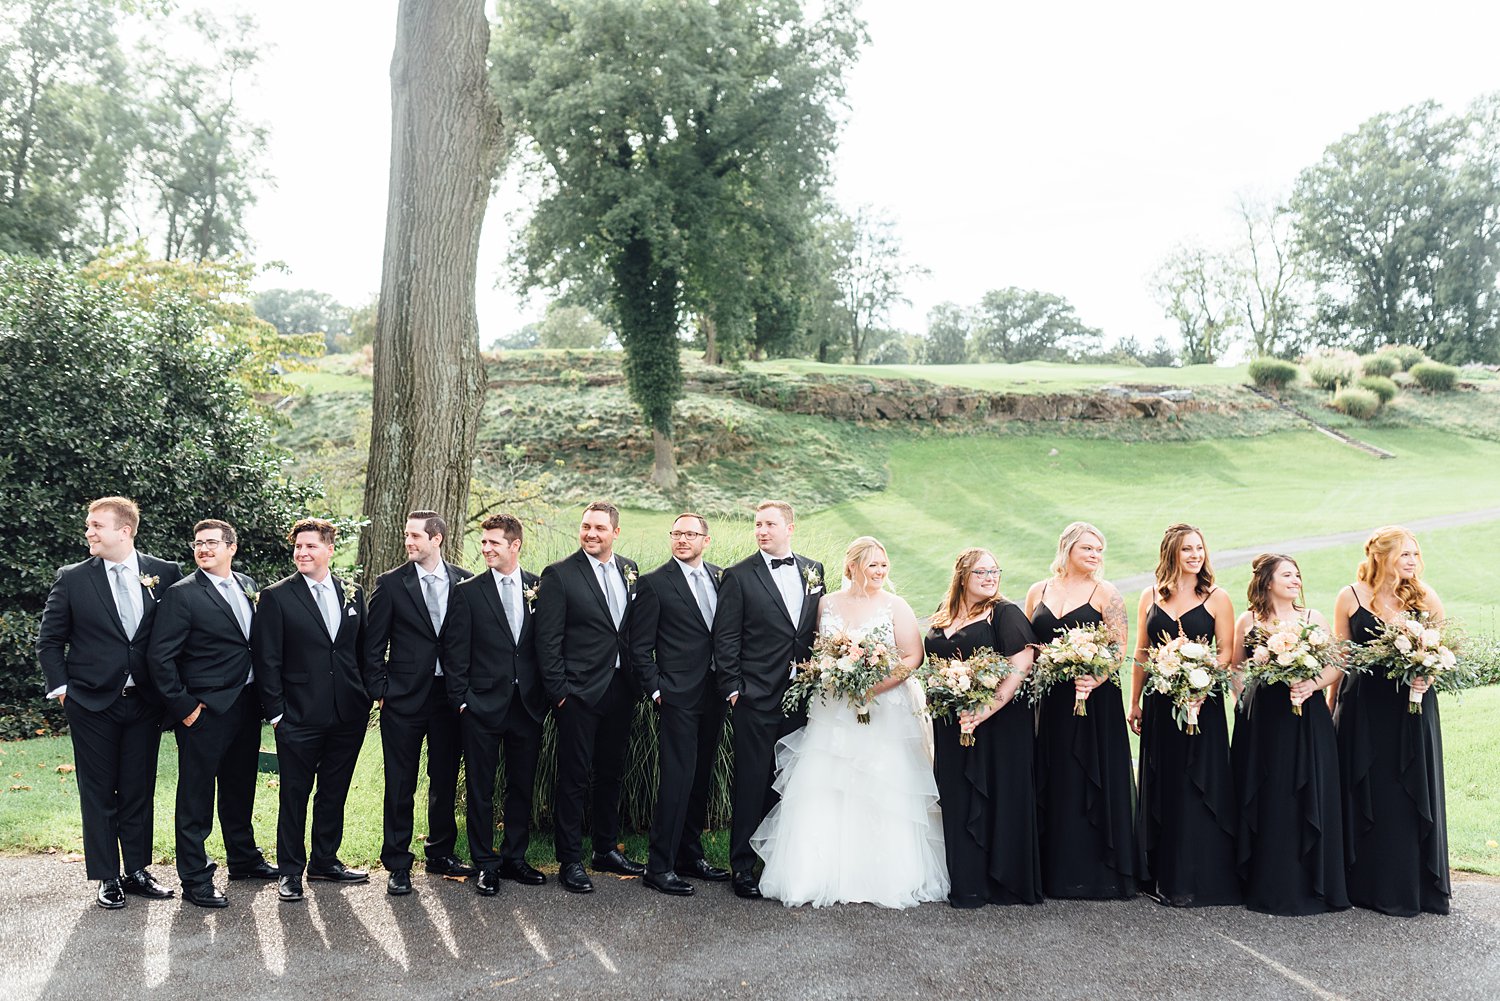 Nicole + Ken - Berkshire Country Club Wedding - Maryland Wedding Photographer - Alison Dunn Photography photo